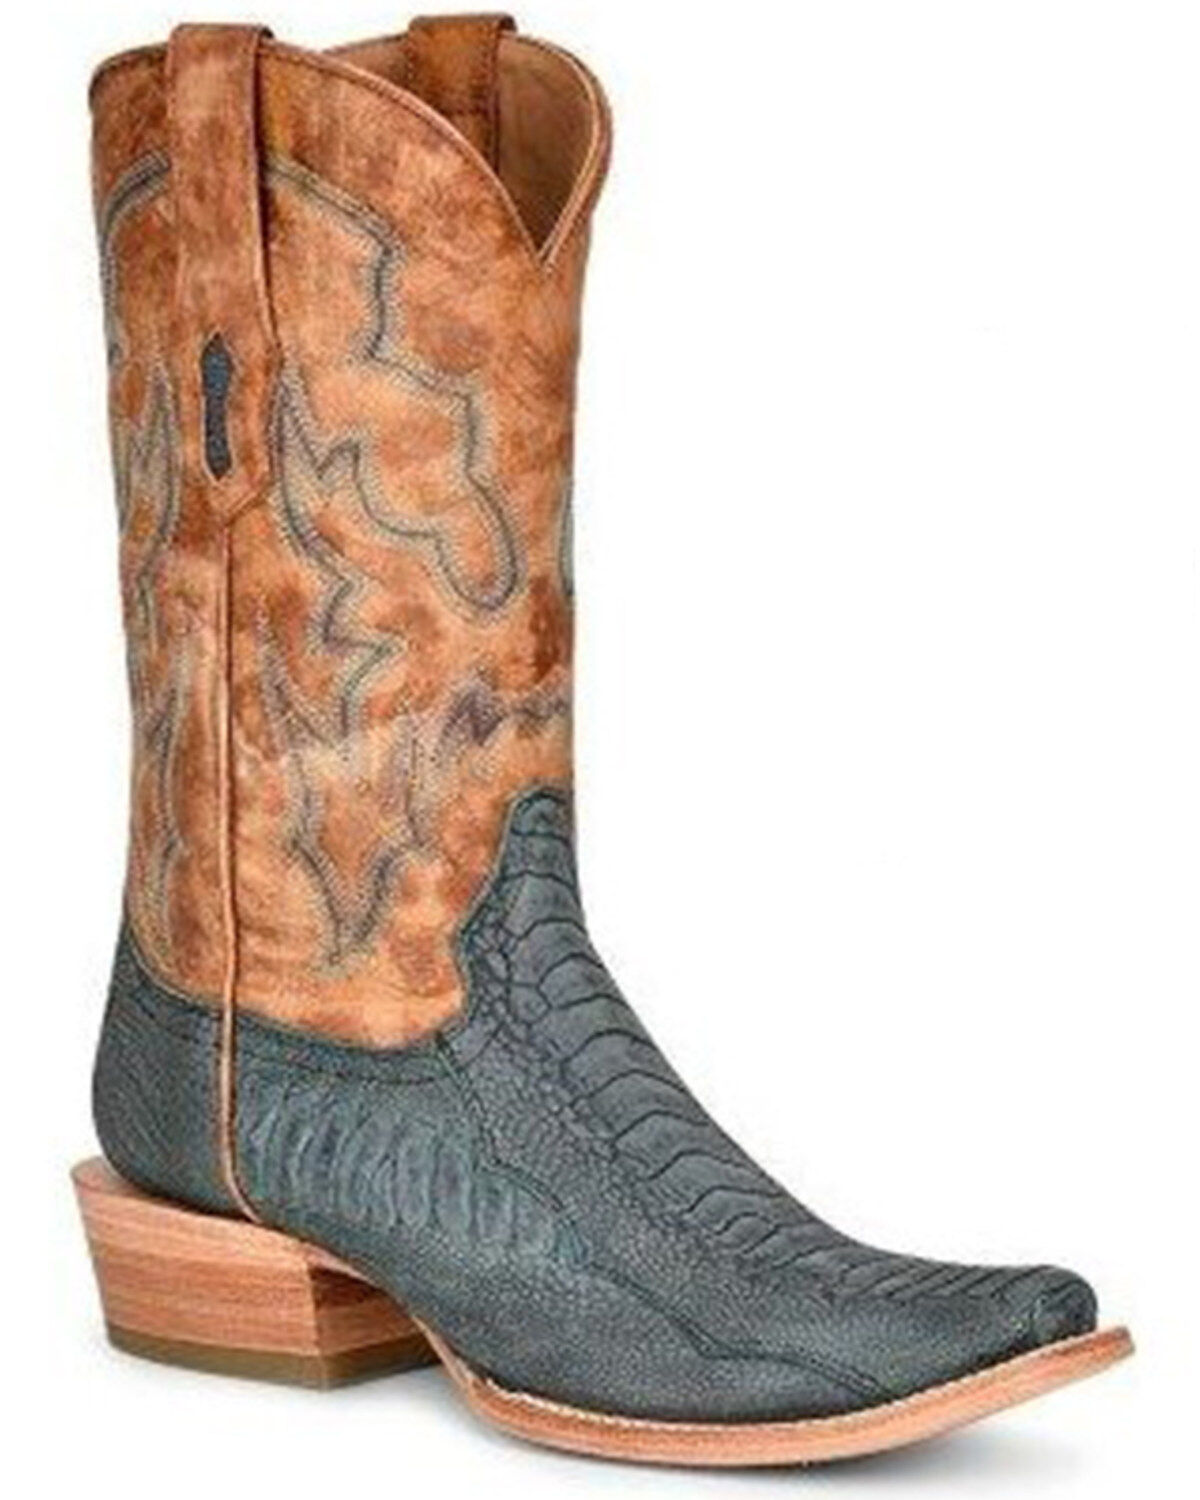 CORRAL Men's Chocolate Eagle Square Toe Cowboy Boots A3071 